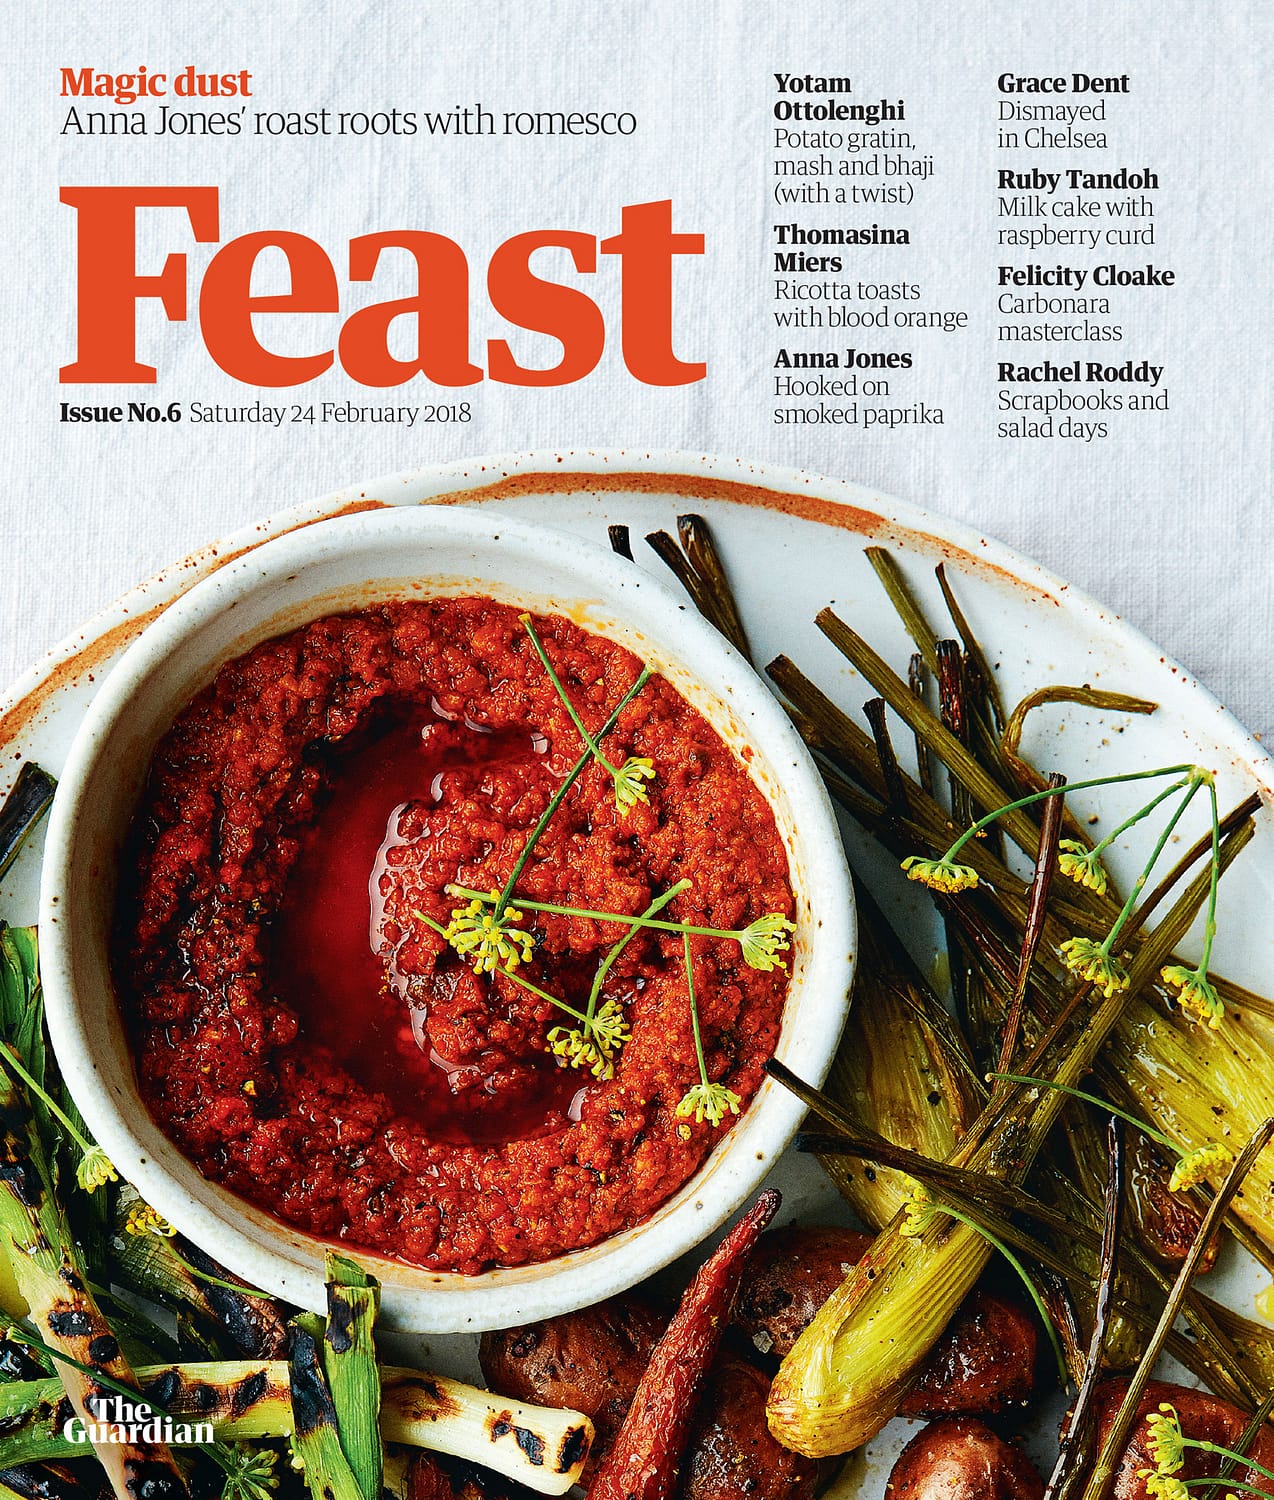 Feast-issue-6-Feb-24-2018-p1-cover-romesco